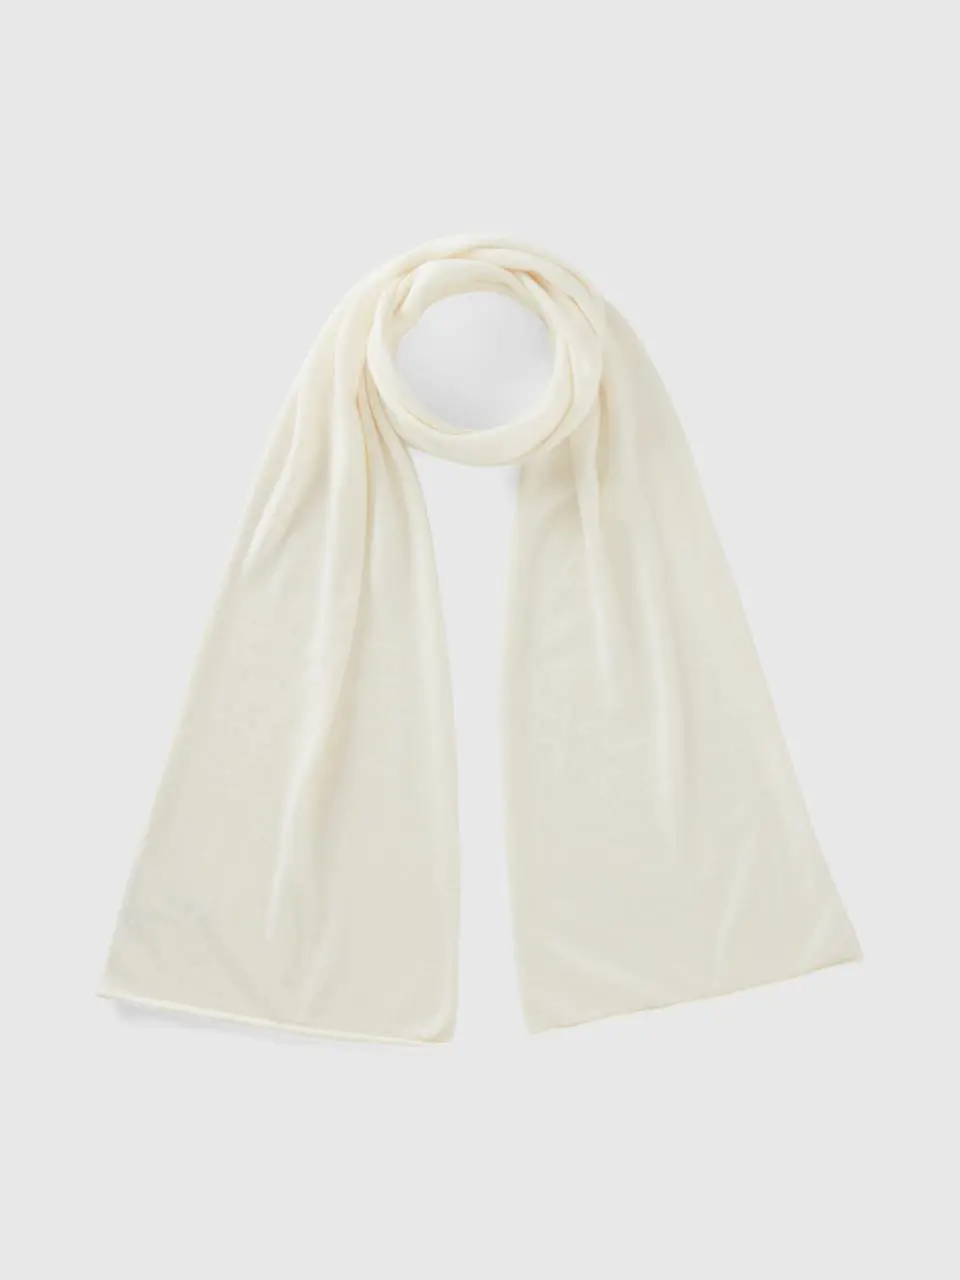 Benetton cream white cashmere blend scarf. 1